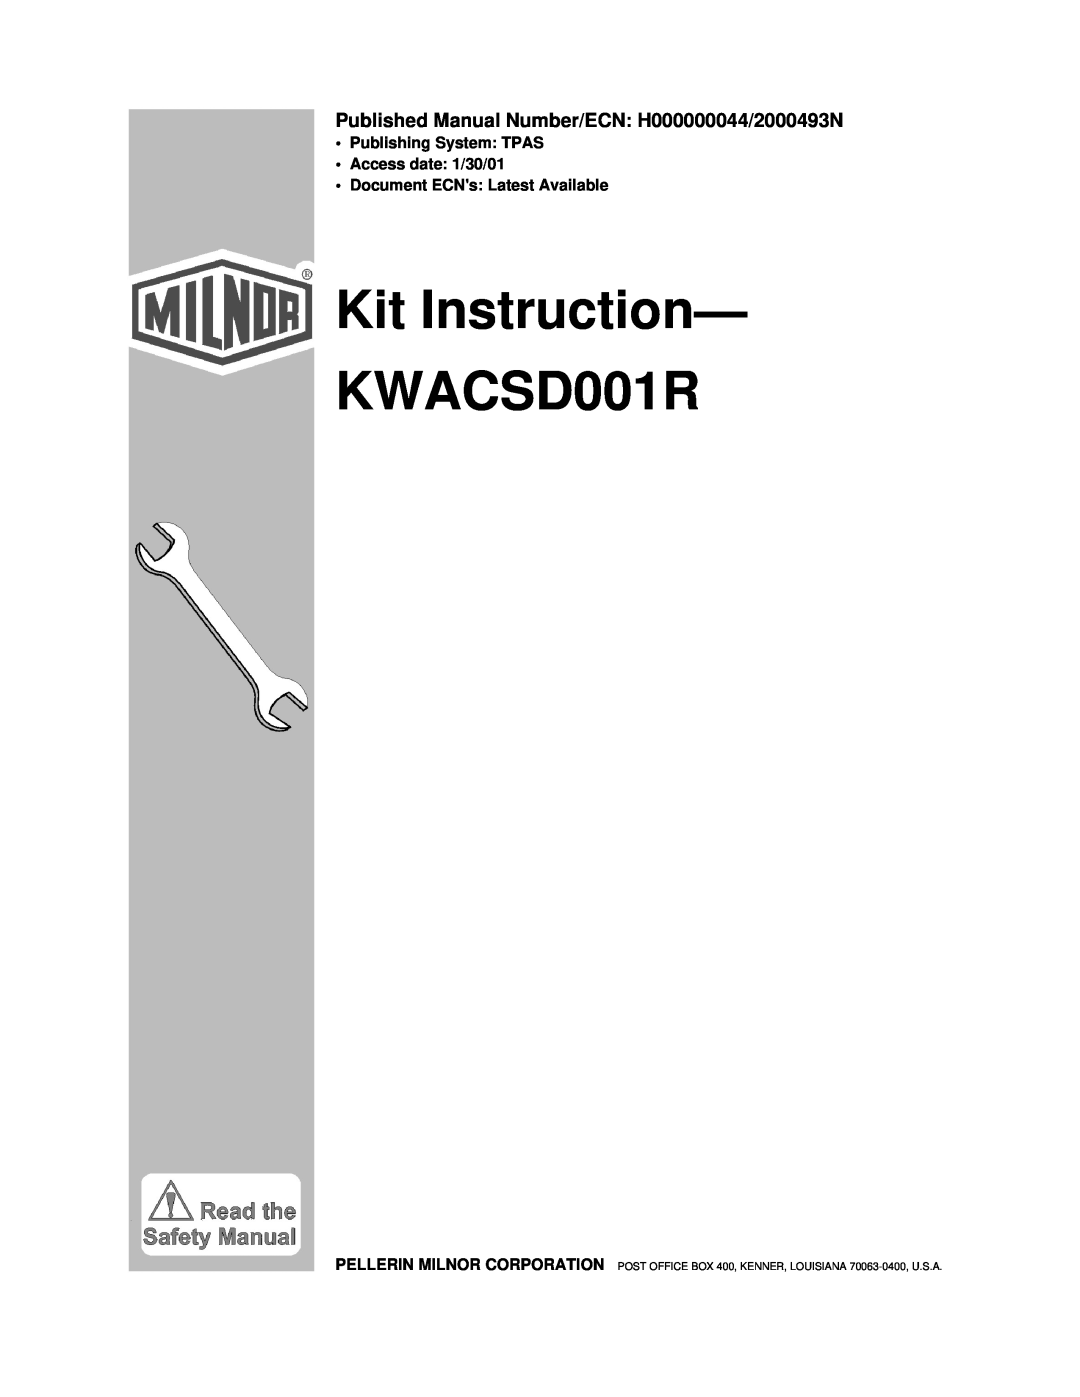 Milnor manual Kit Instruction— KWACSD001R, Published Manual Number/ECN: H000000044/2000493N 